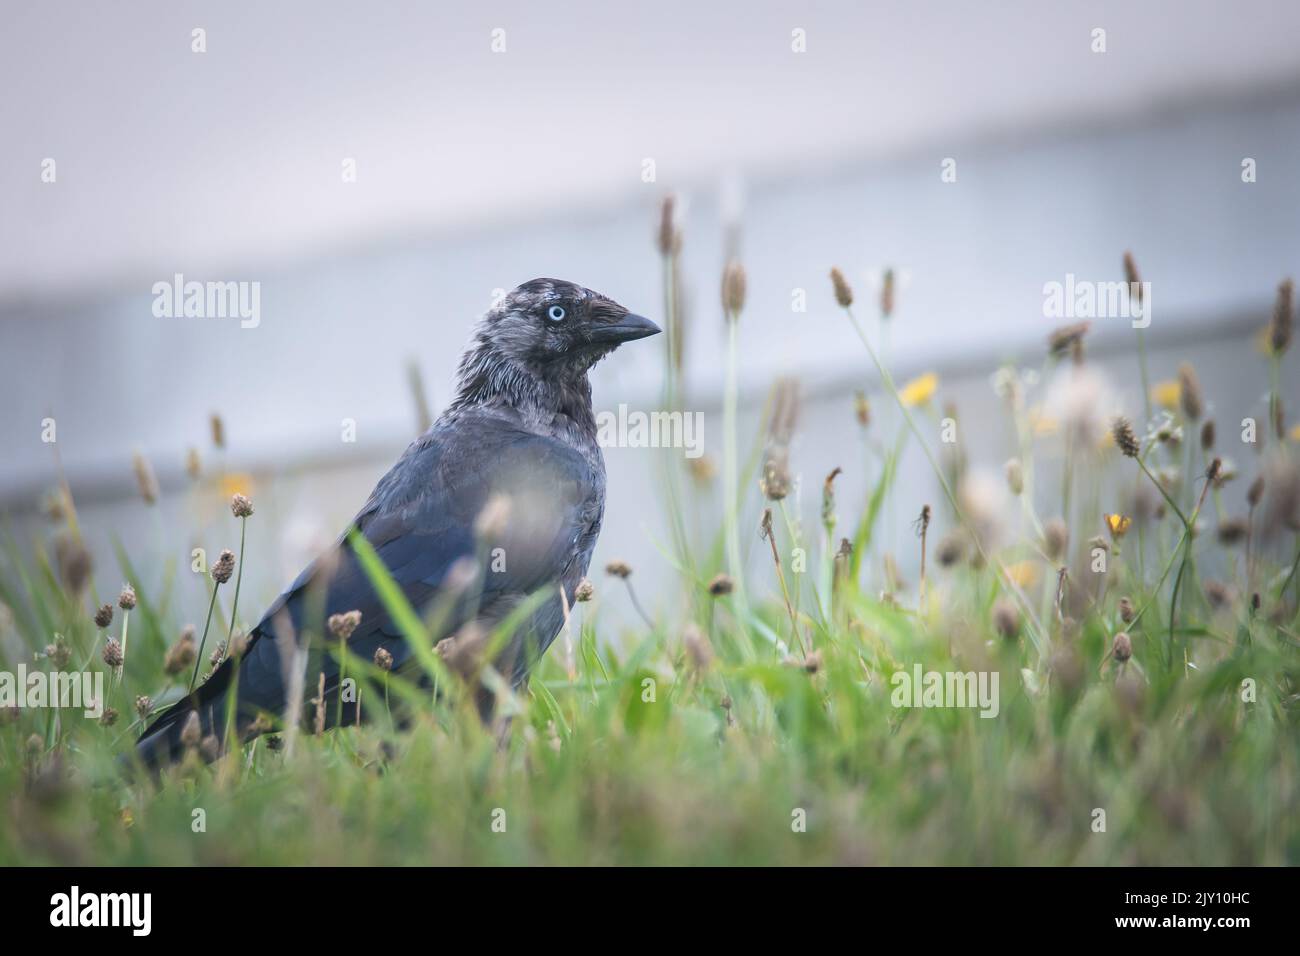 Coloeus Monedula or Corvus Monedula on the grass in the city. Western Jackdaw bird from Corvidae or crow family. Stock Photo